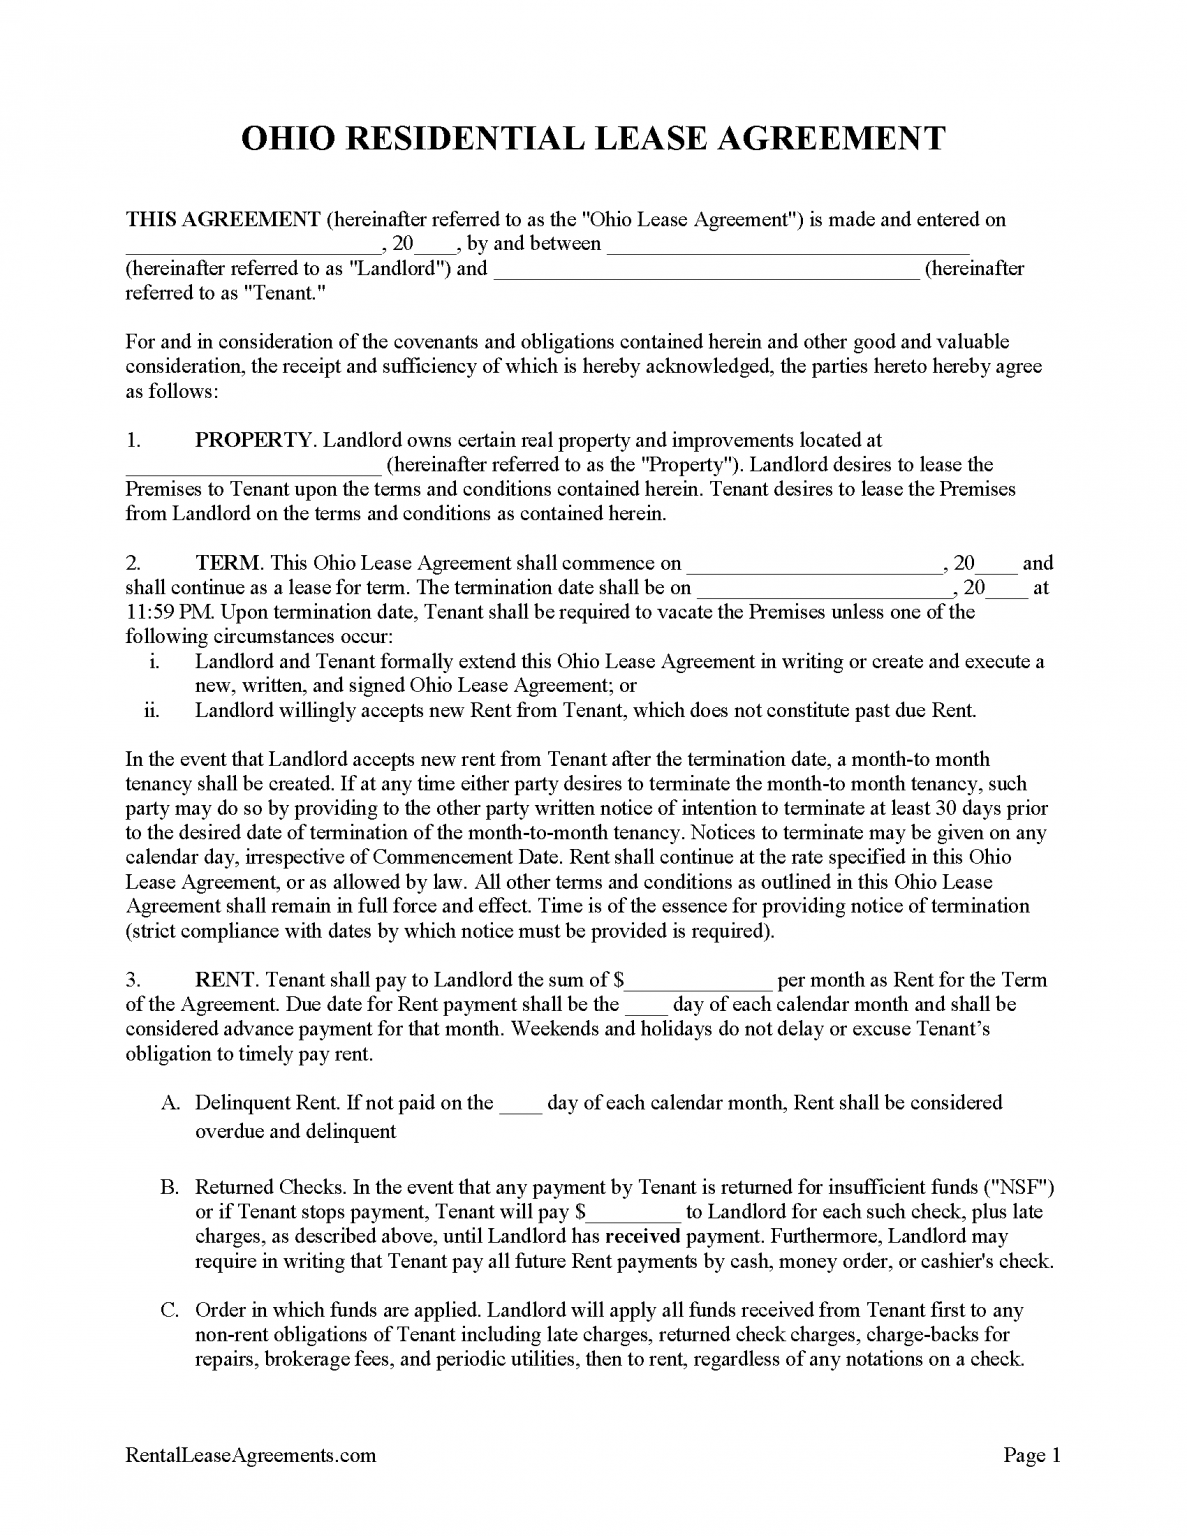 ohio-lease-agreement-templates-6